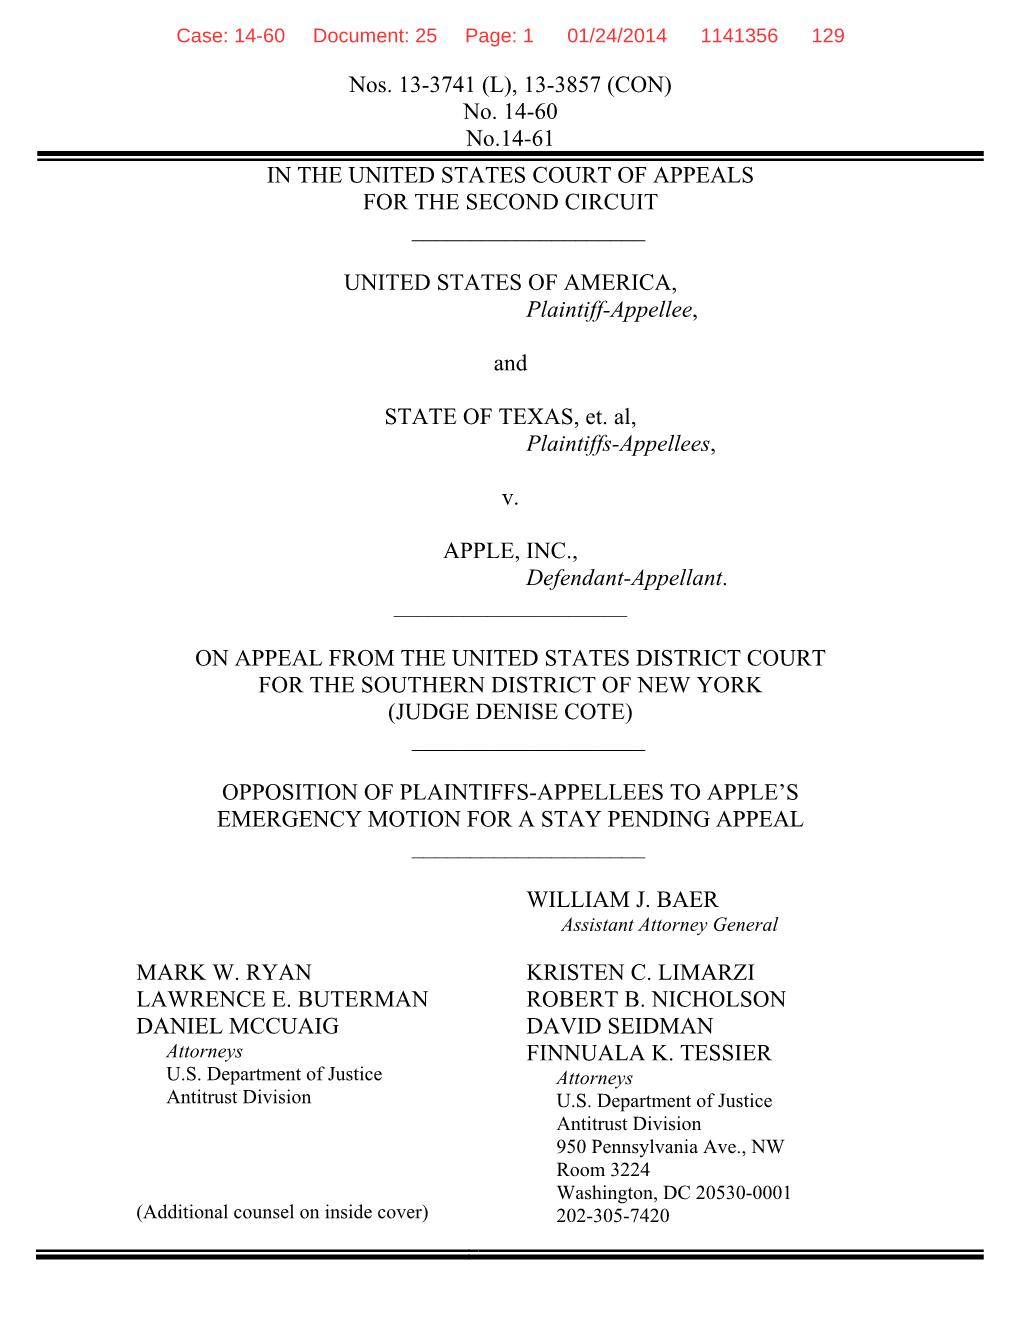 US and Plaintiff States V. Apple